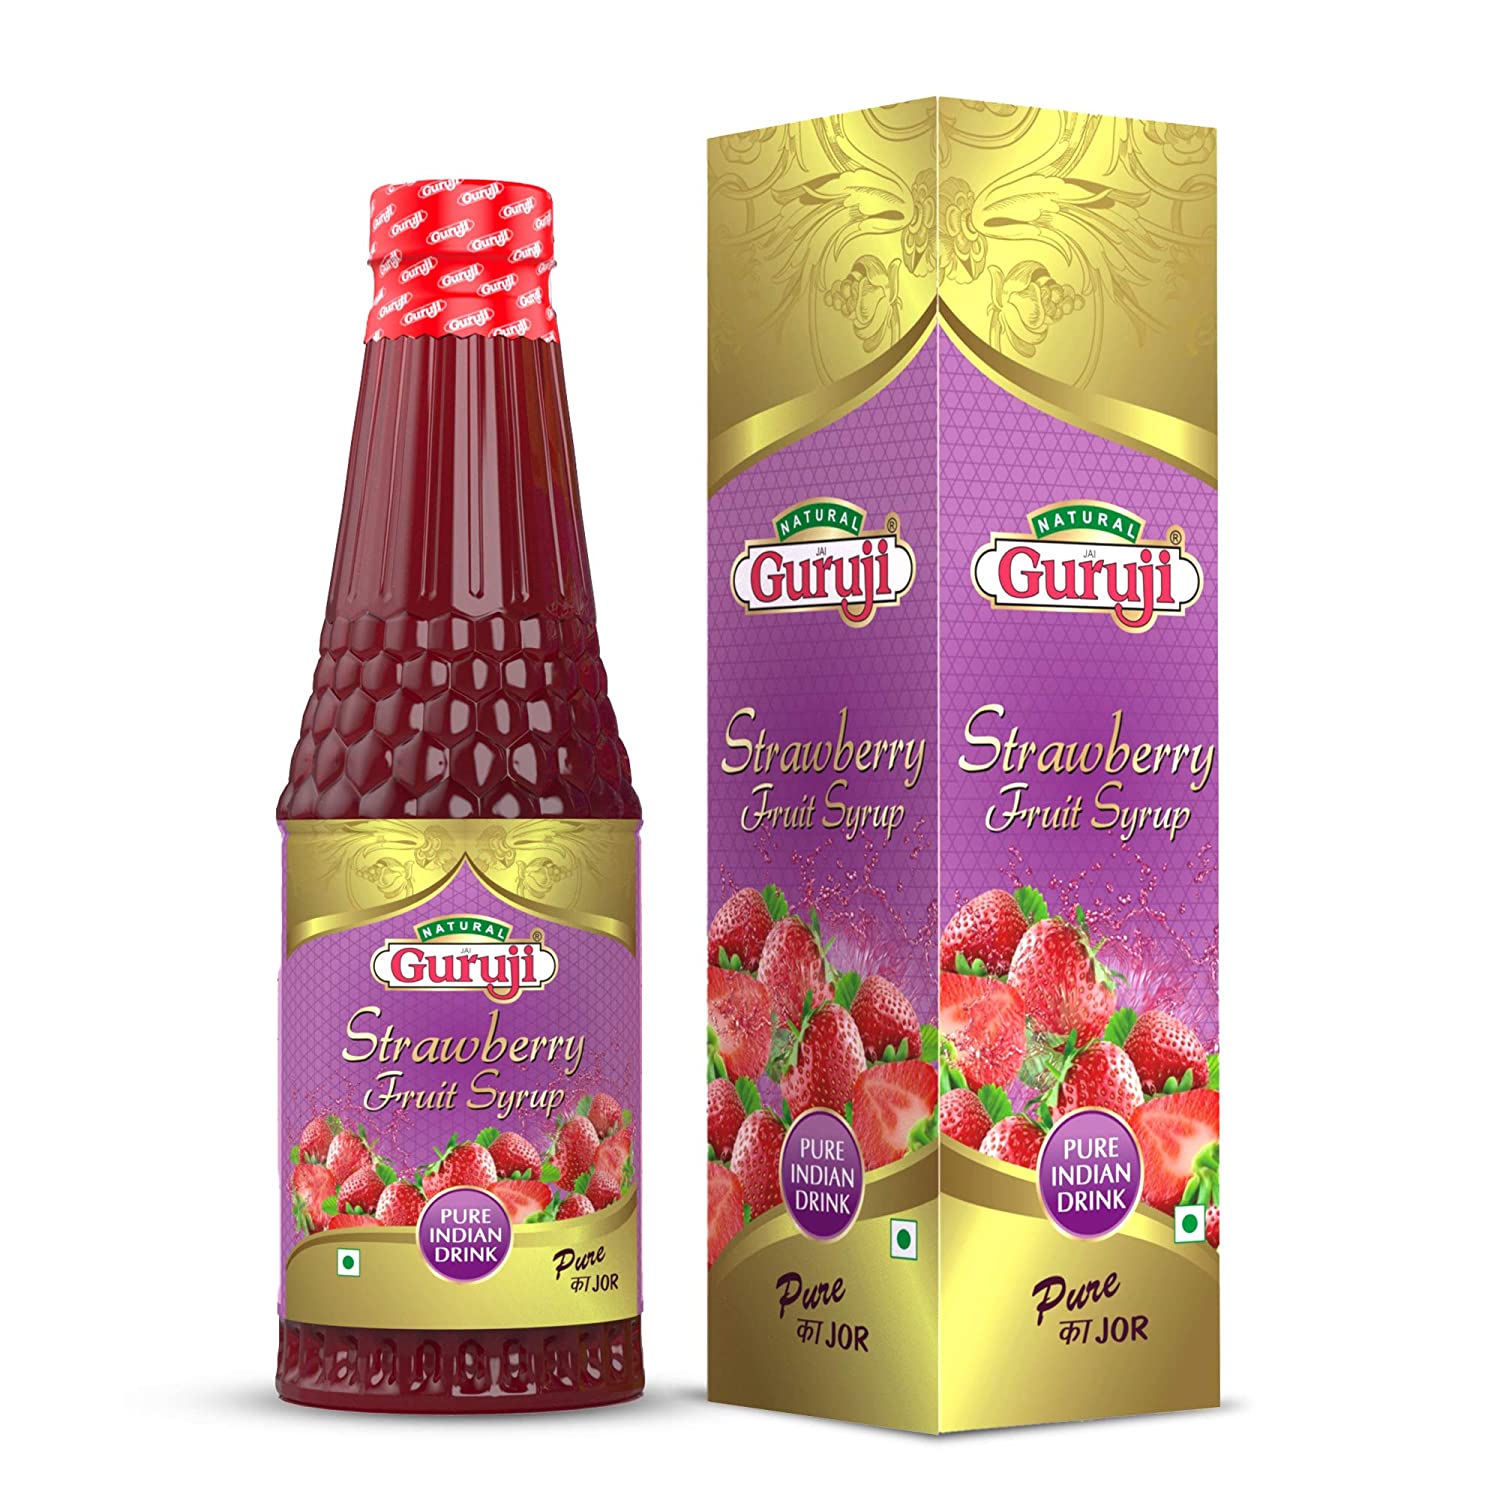 Jai Guruji Strawberry Fruit Syrup Sharbat Image